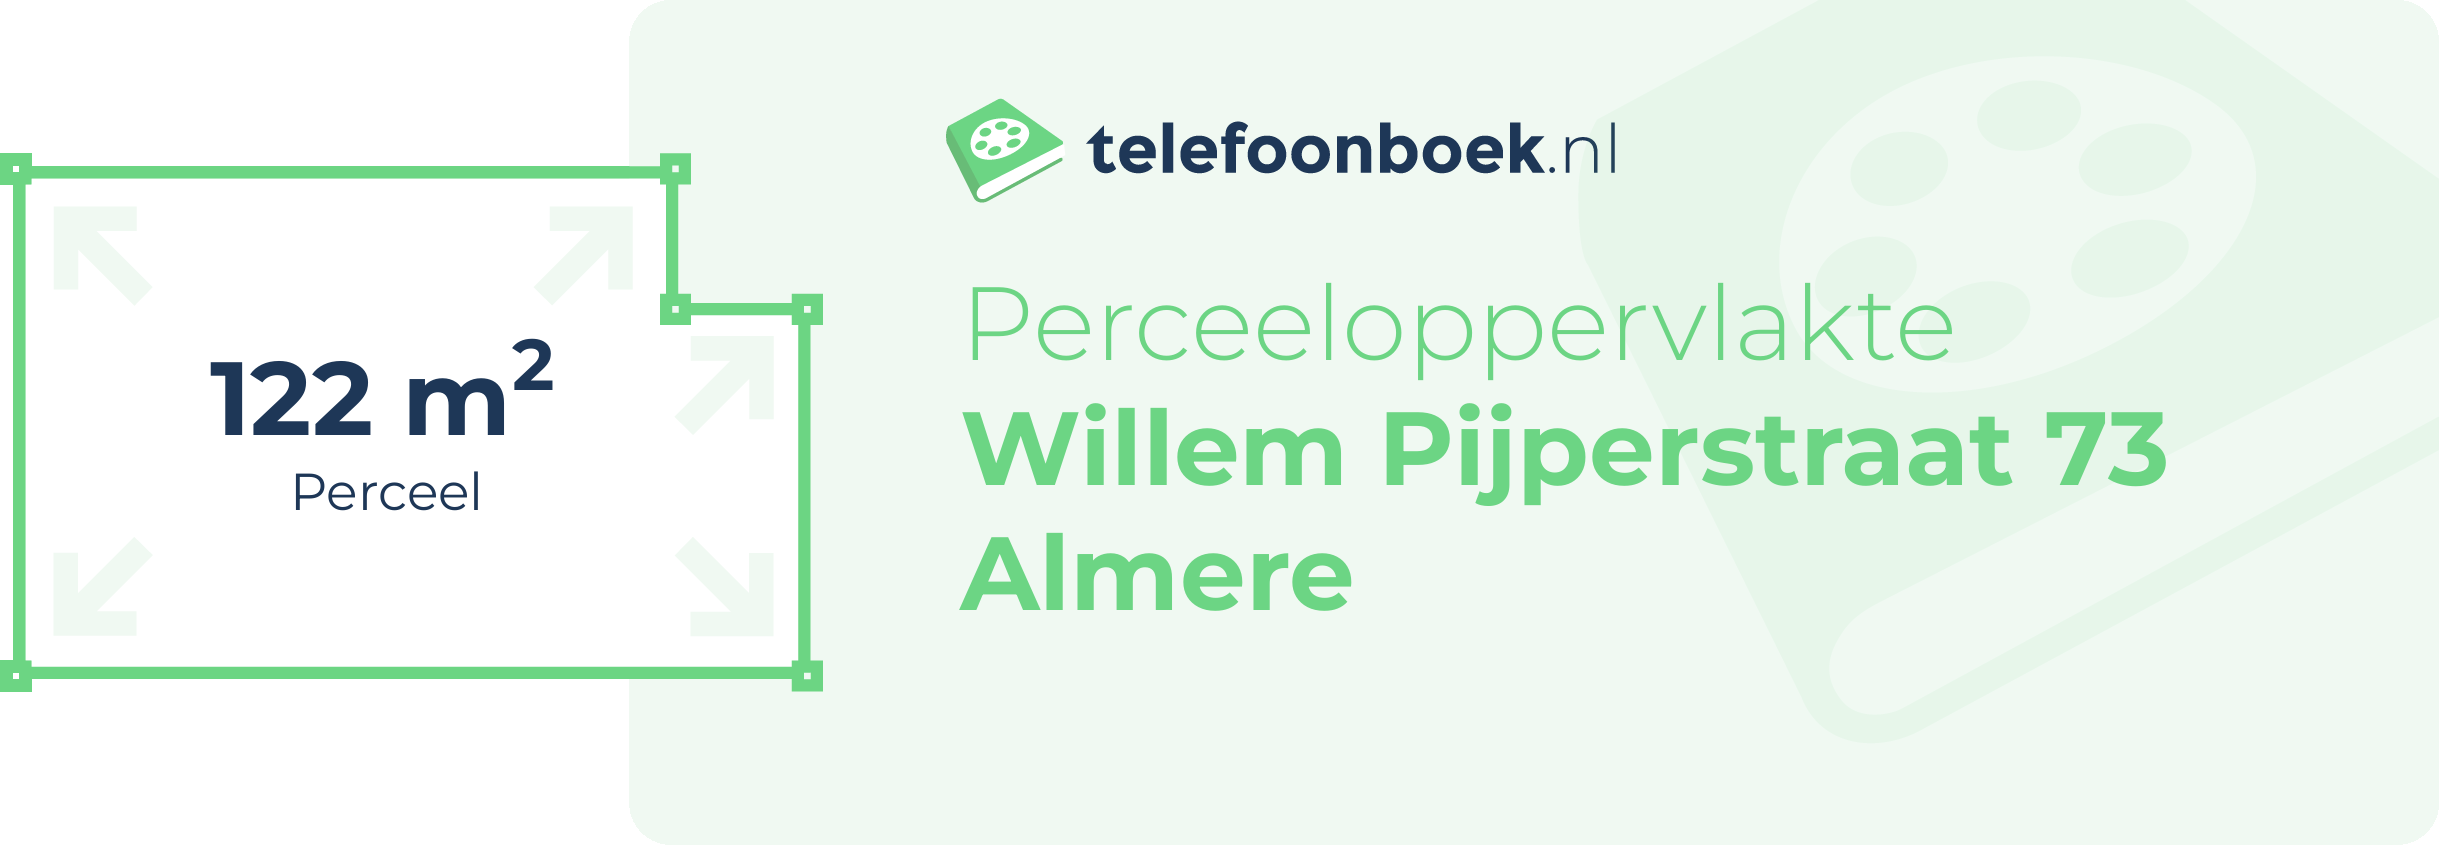 Perceeloppervlakte Willem Pijperstraat 73 Almere